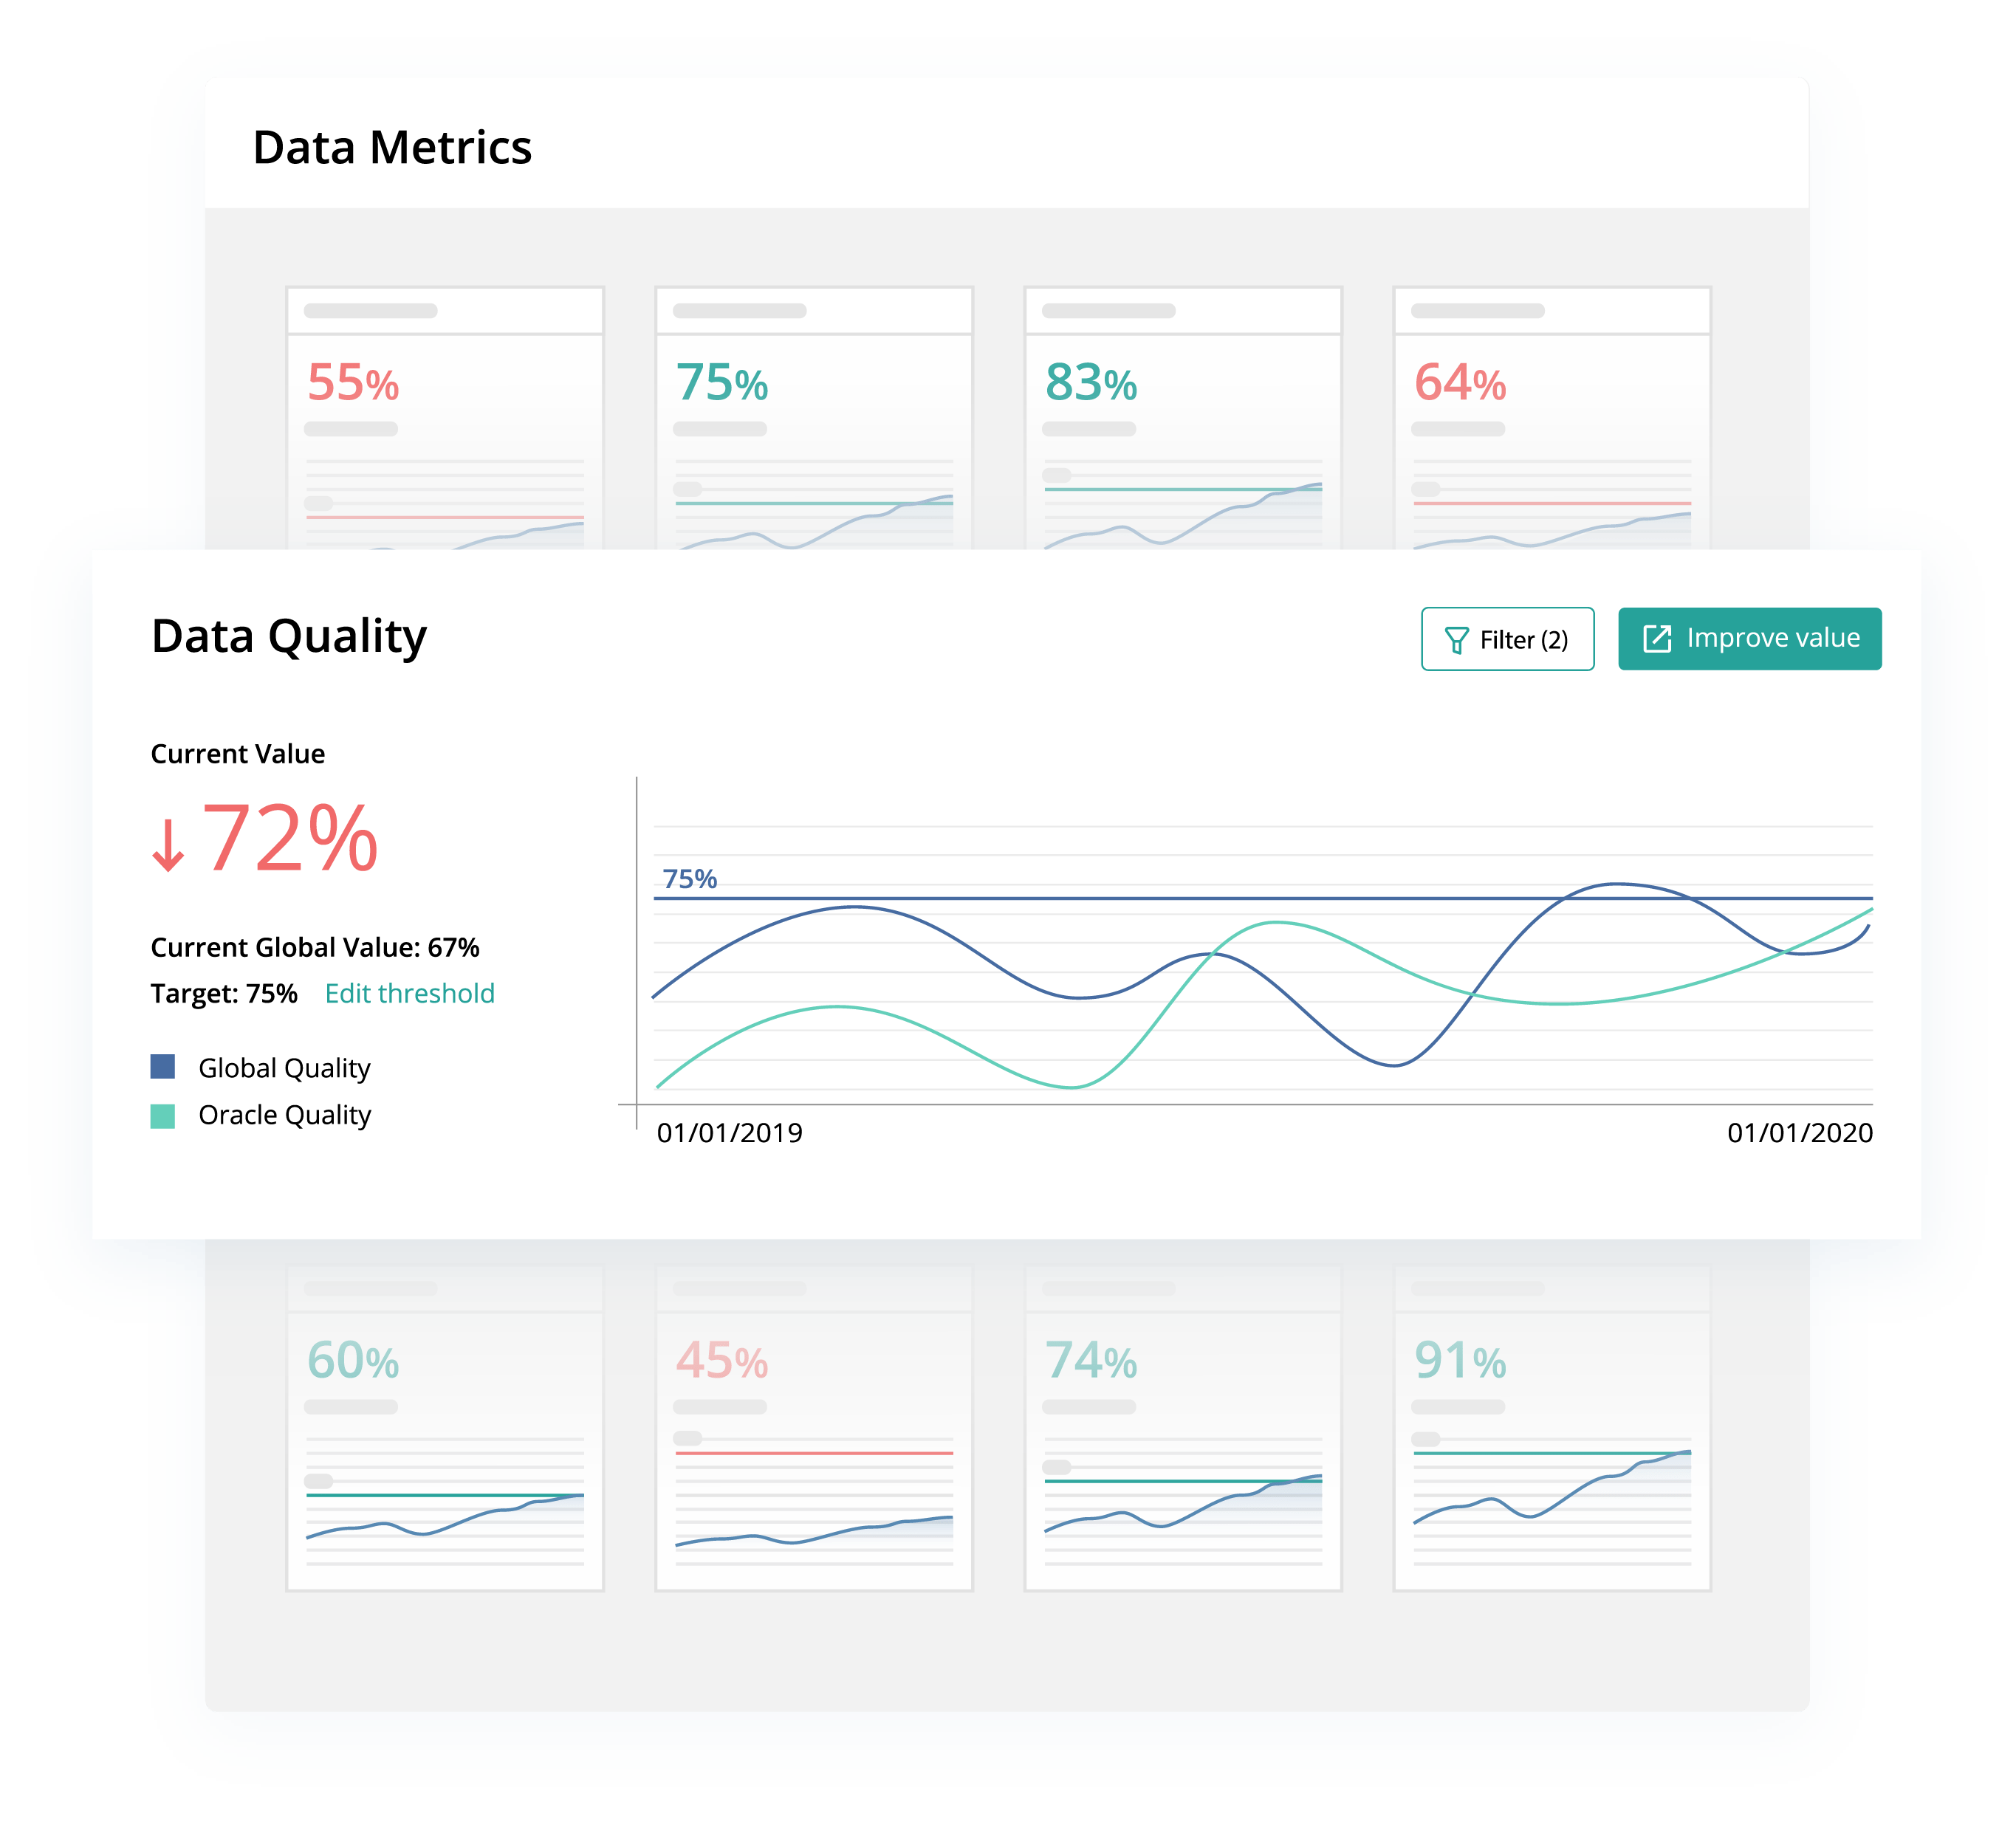 Data quality metrics